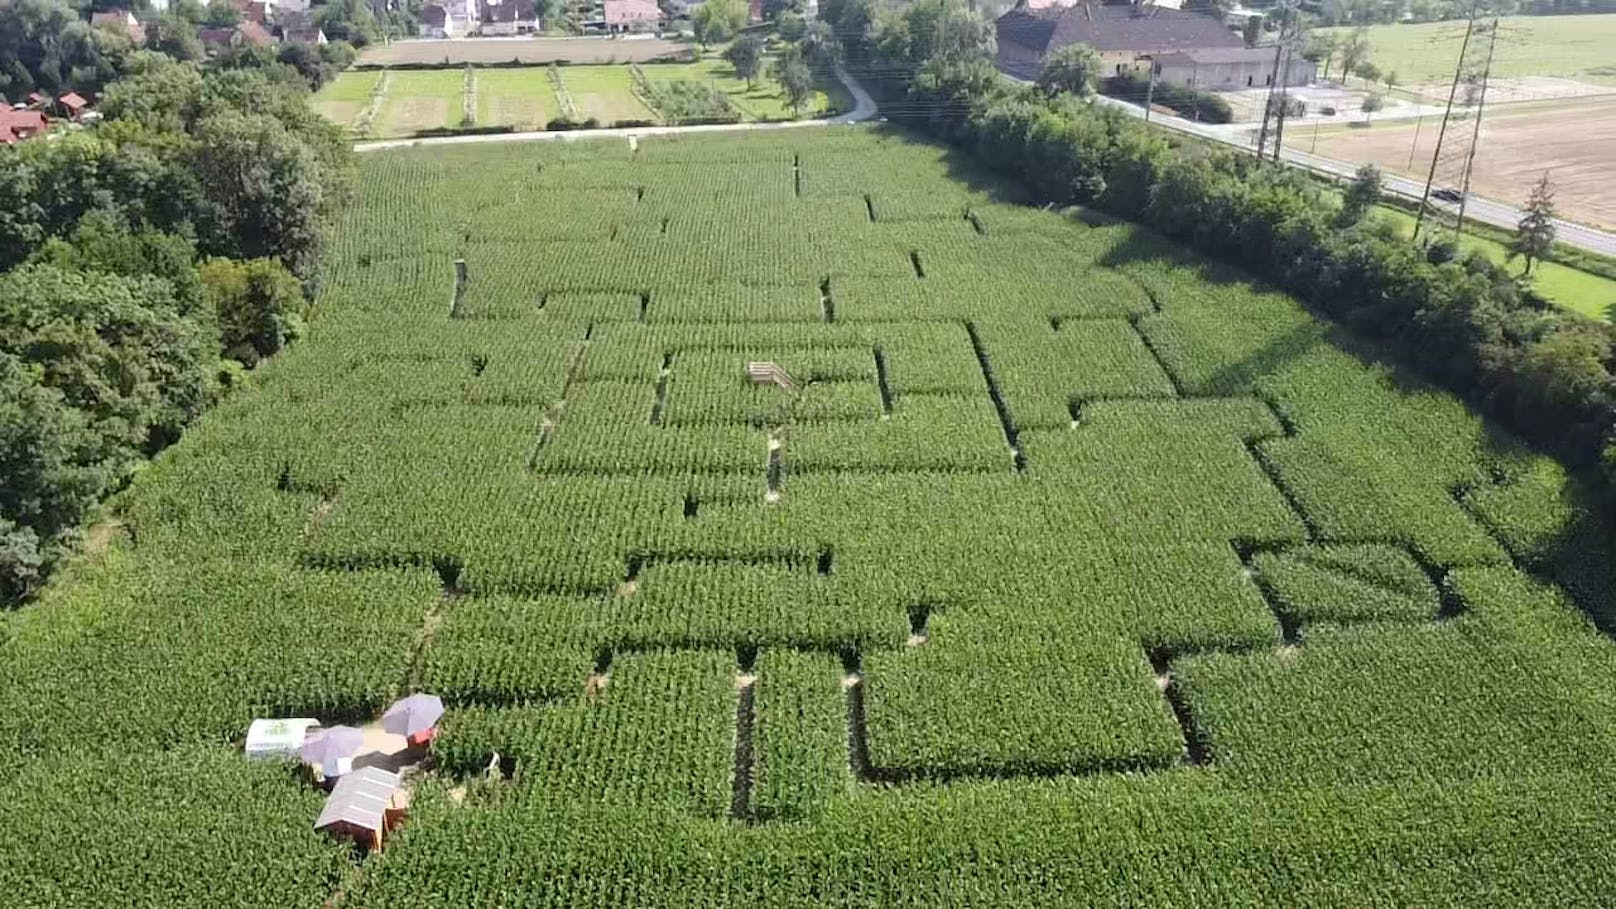 Das Mega-Maislabyrinth ist 25.000 Quadratmeter groß.